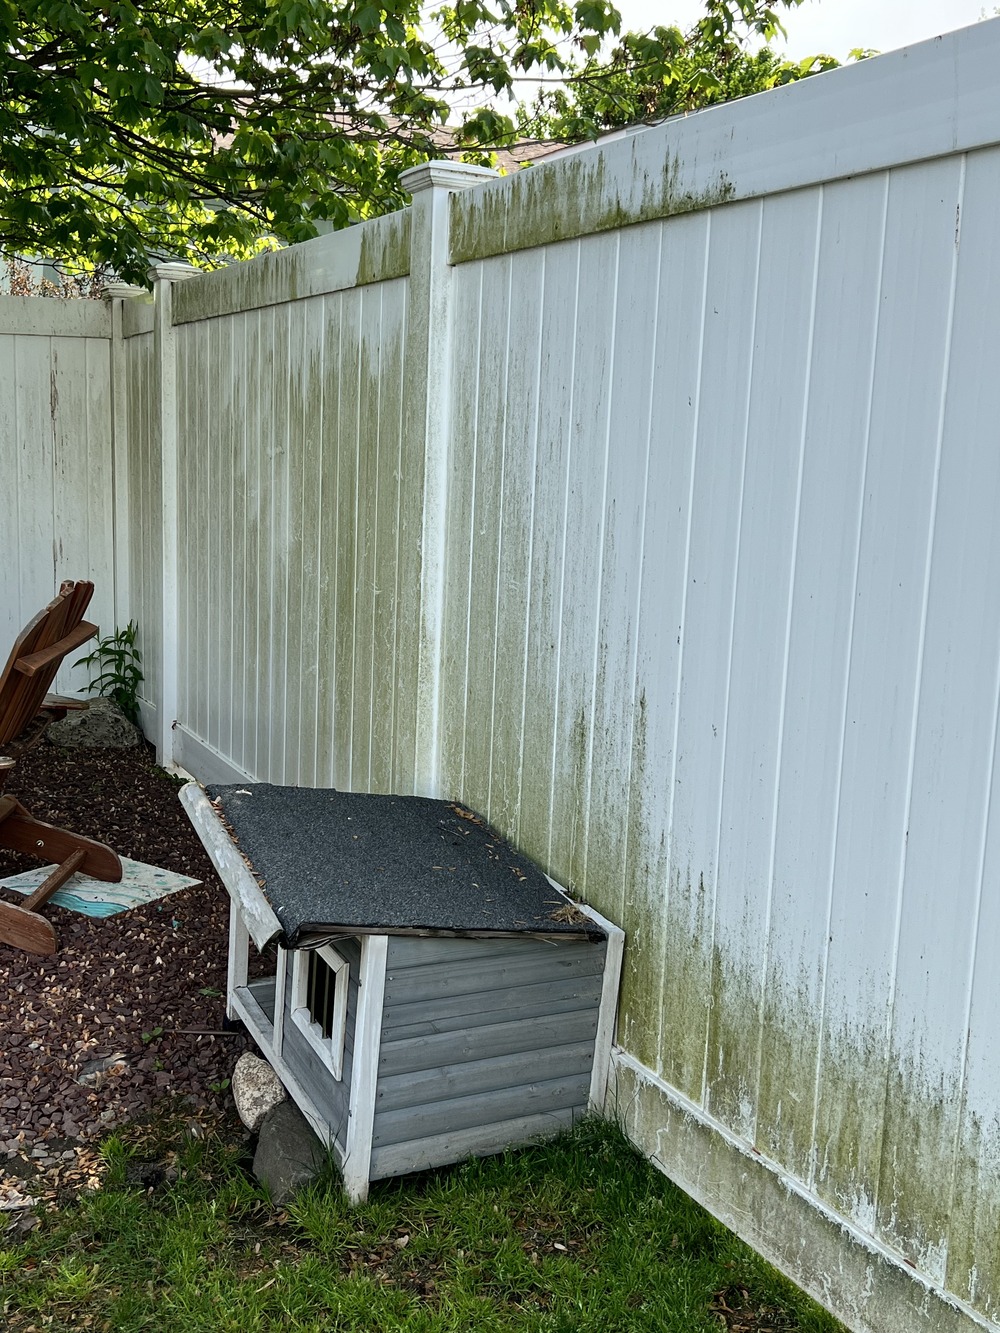 Vinyl siding fence washed and restored to like new in Ridgewood, NJ